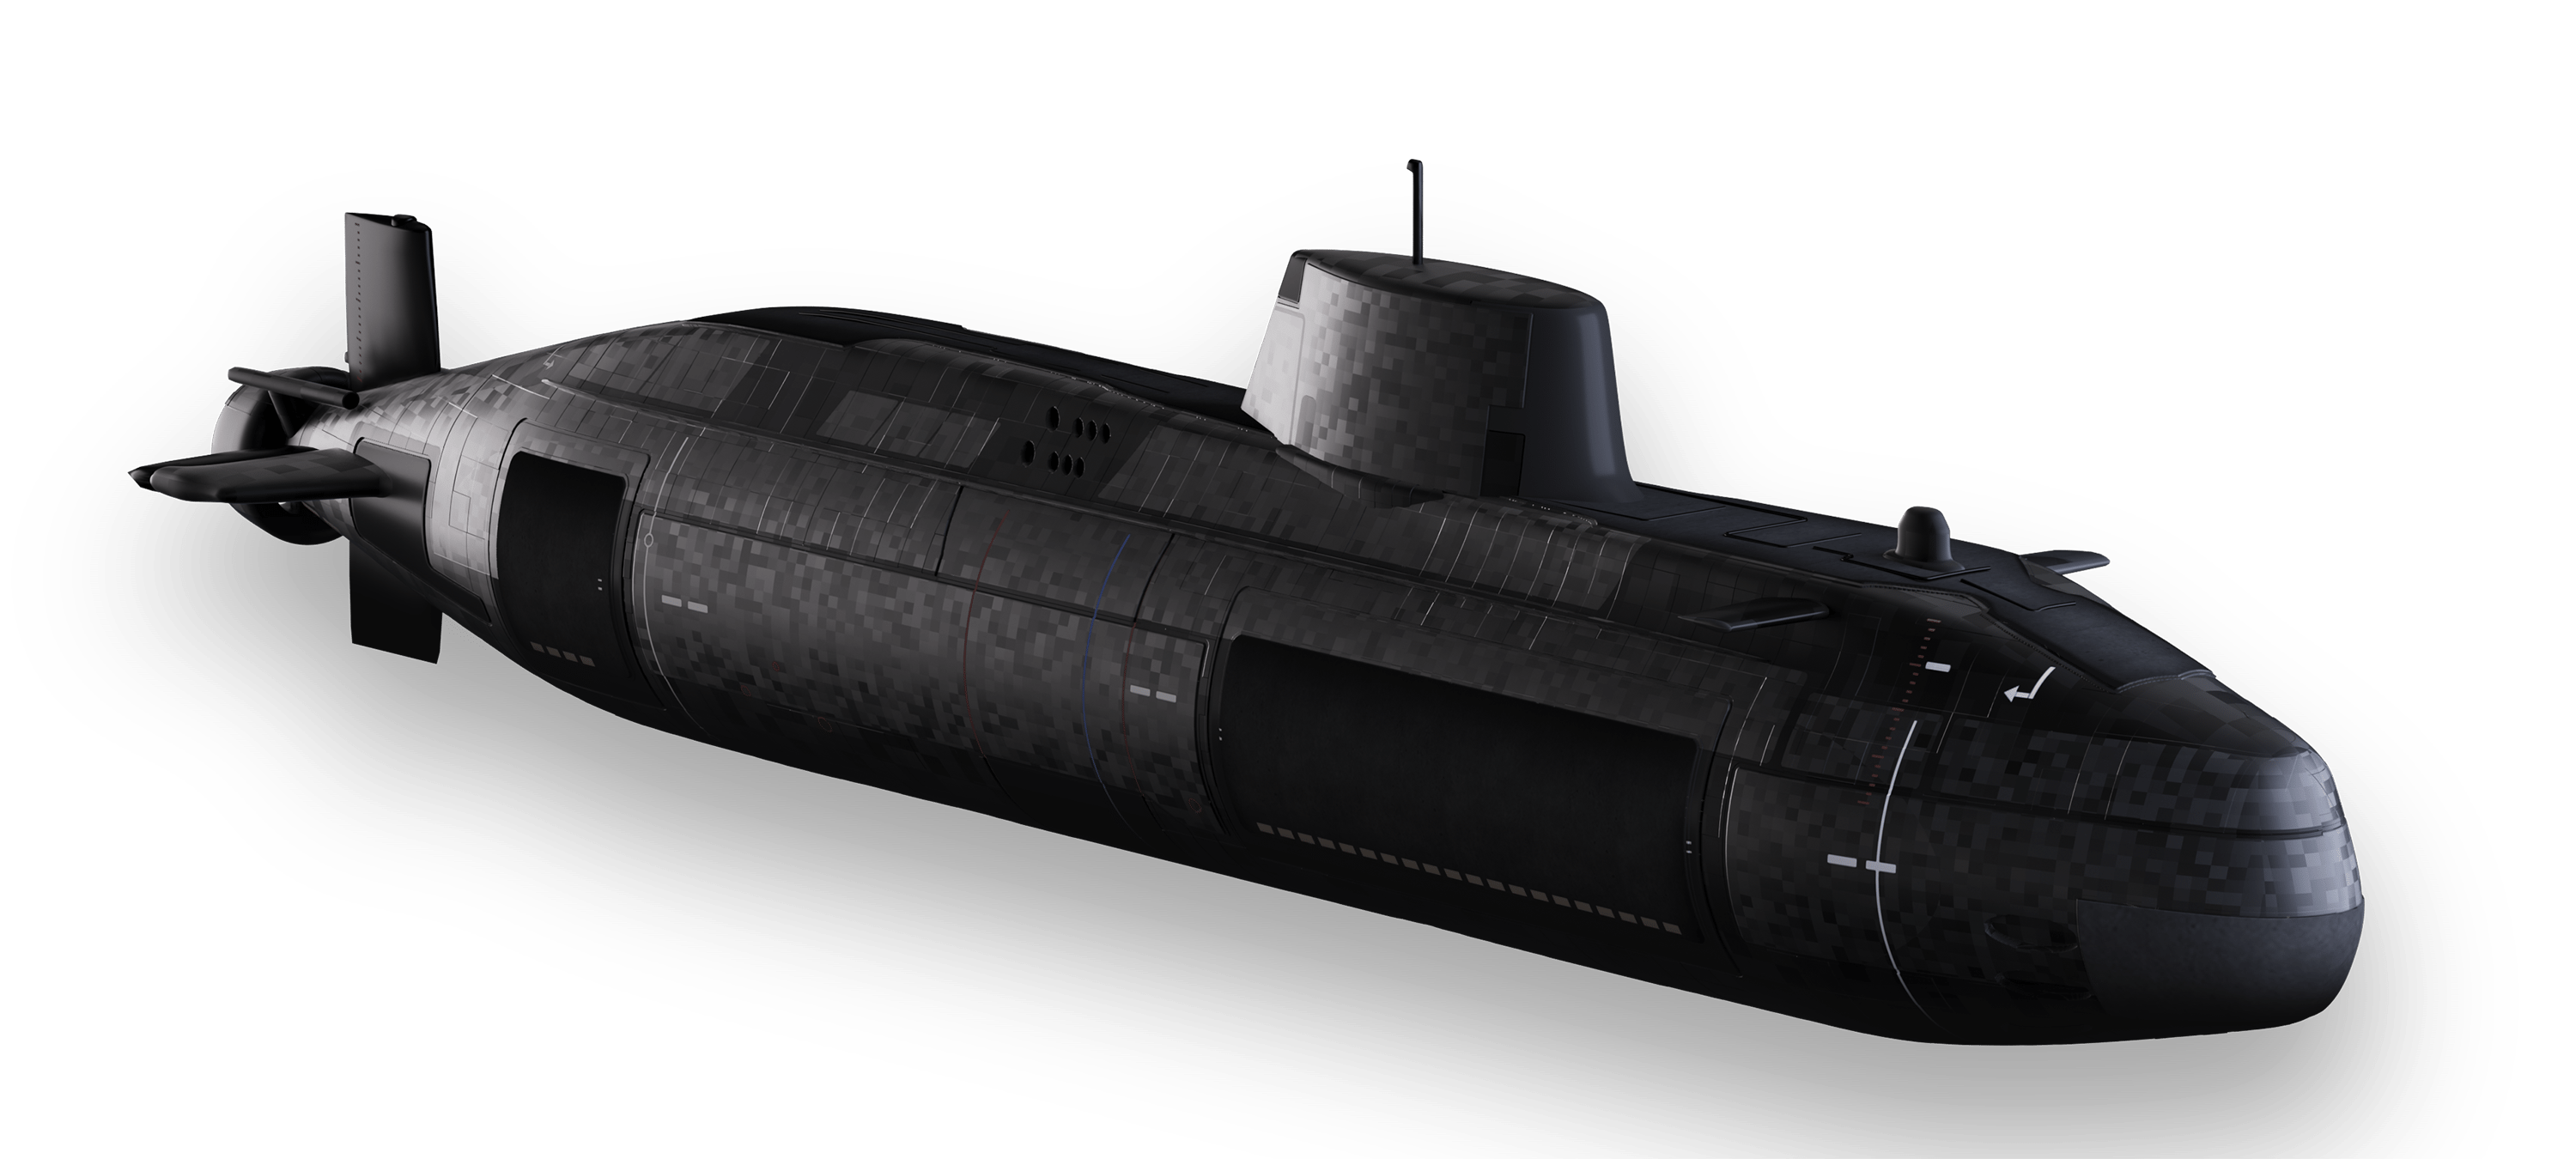 3D visualisation of Astute Class submarine